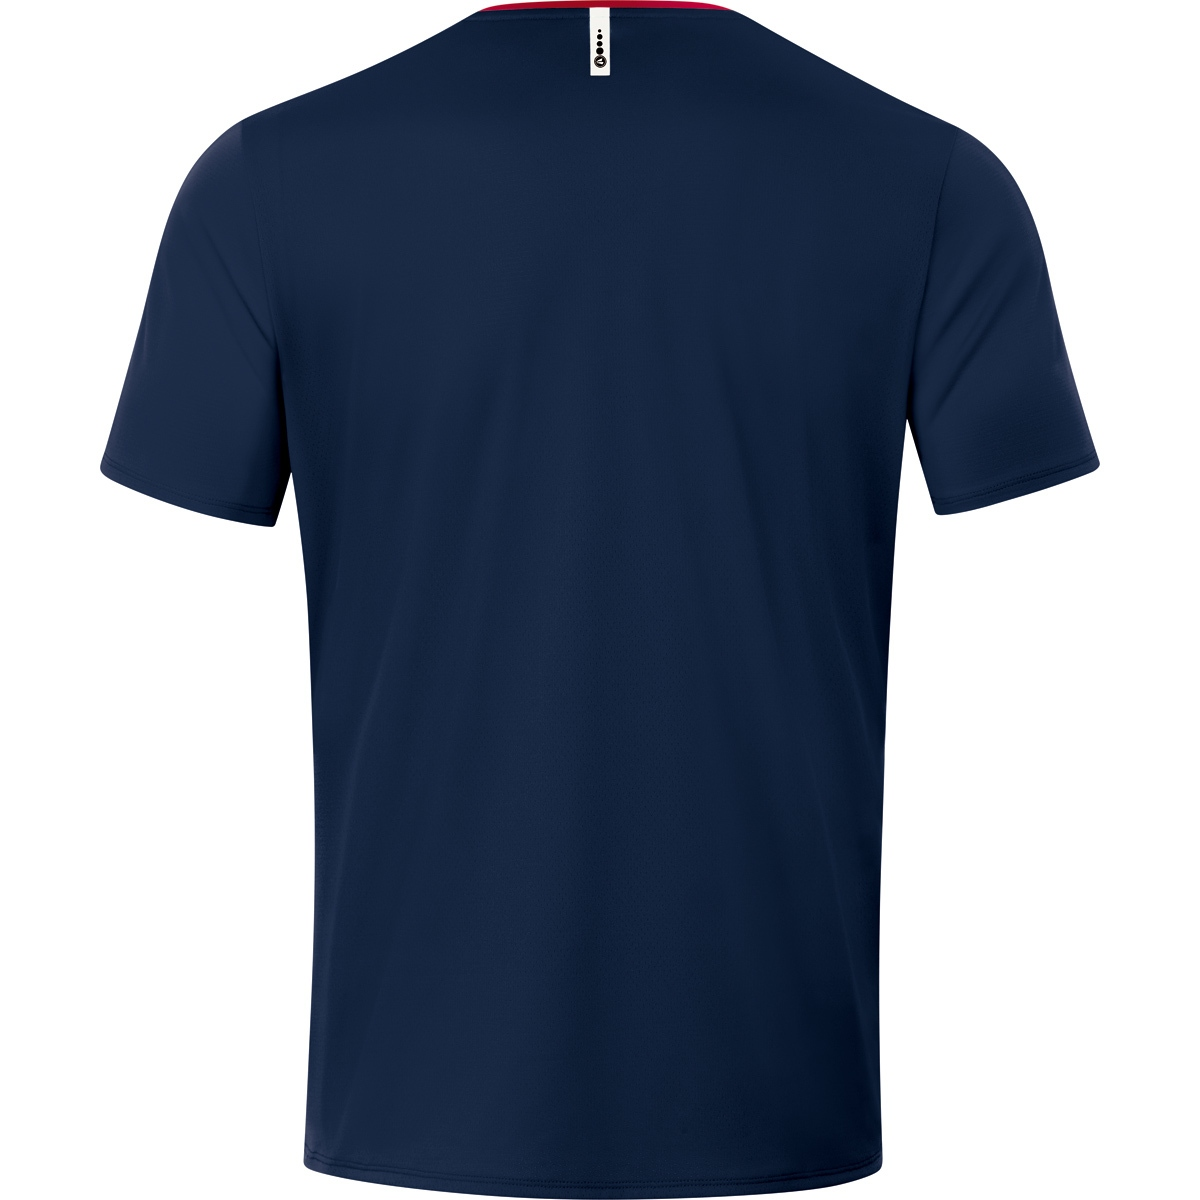 JAKO T-Shirt Champ 2.0 Gr. 128, 6120 Kinder, rot, marine/chili